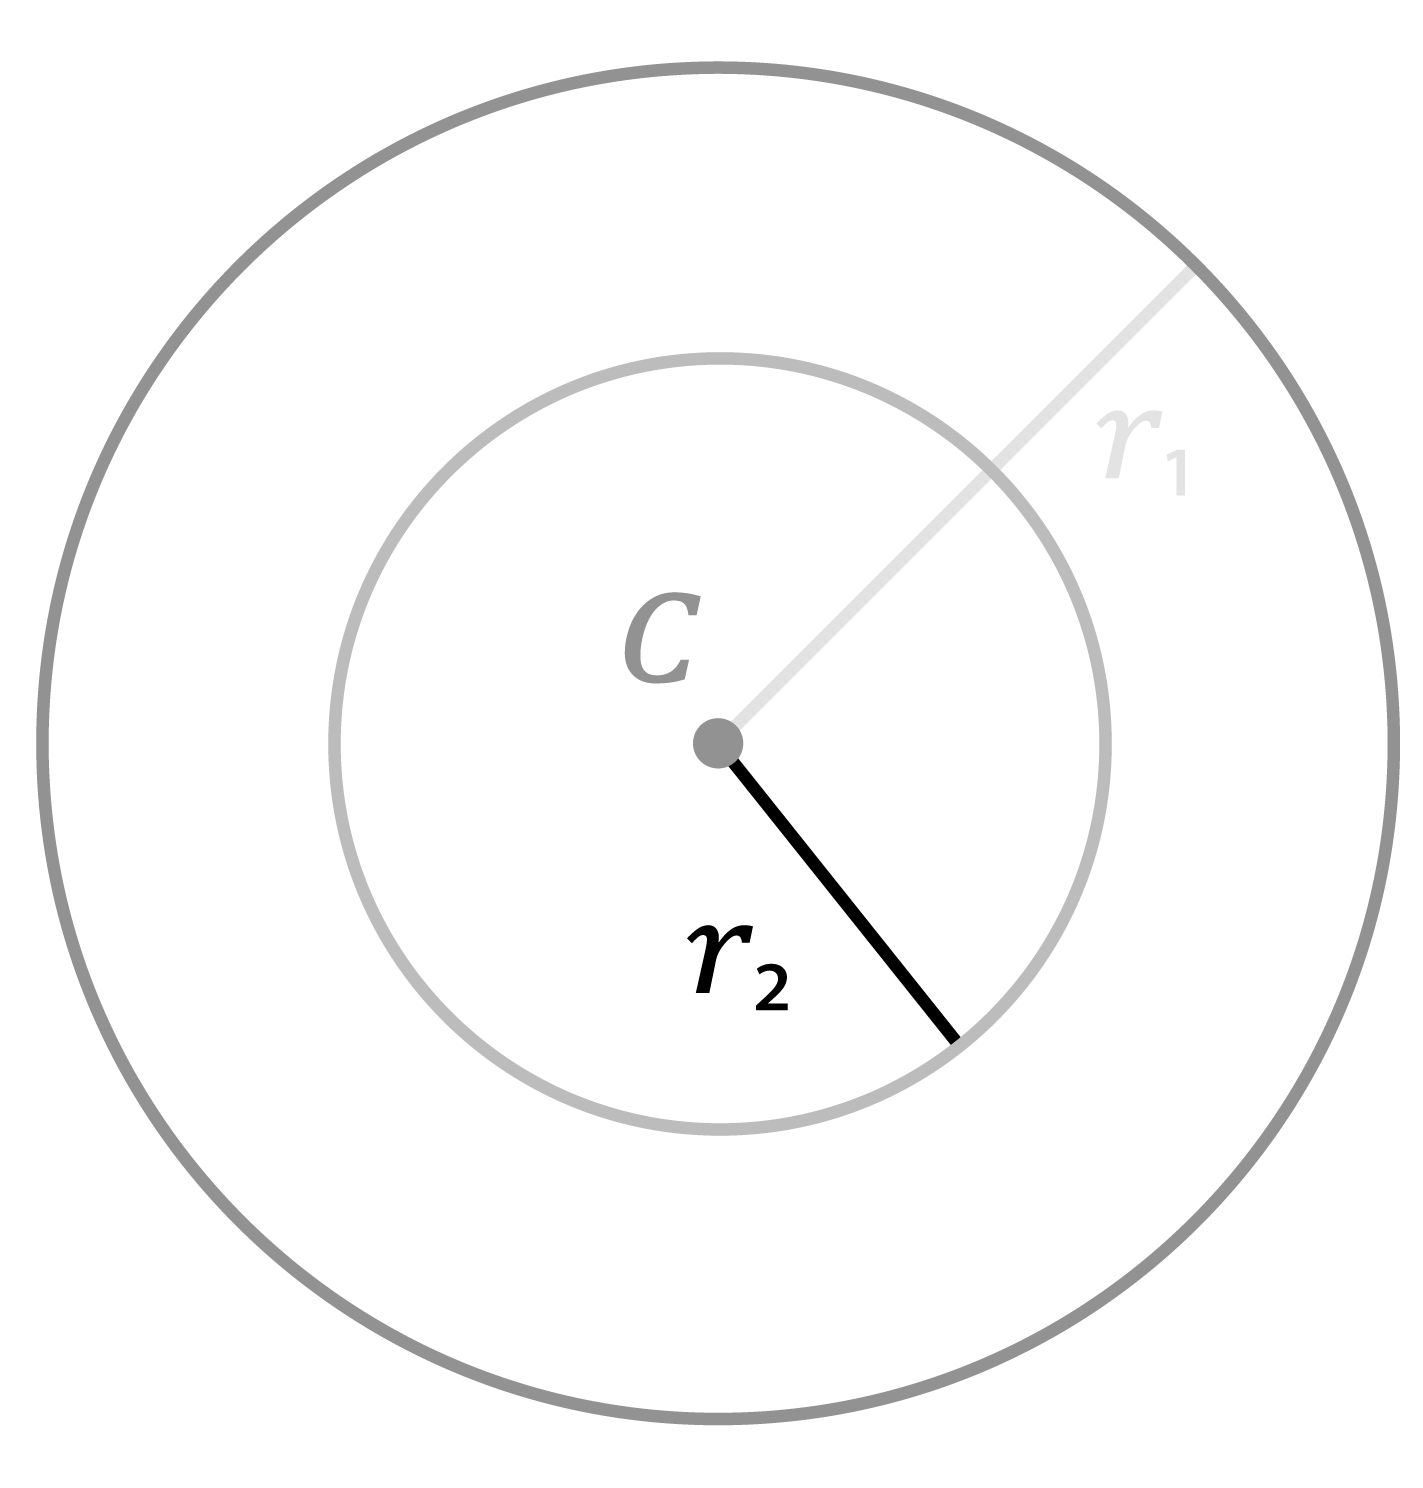 Matemáticas; Cónicas; 1. Bachillerato; Circunferencia: Elementos y ecuación general